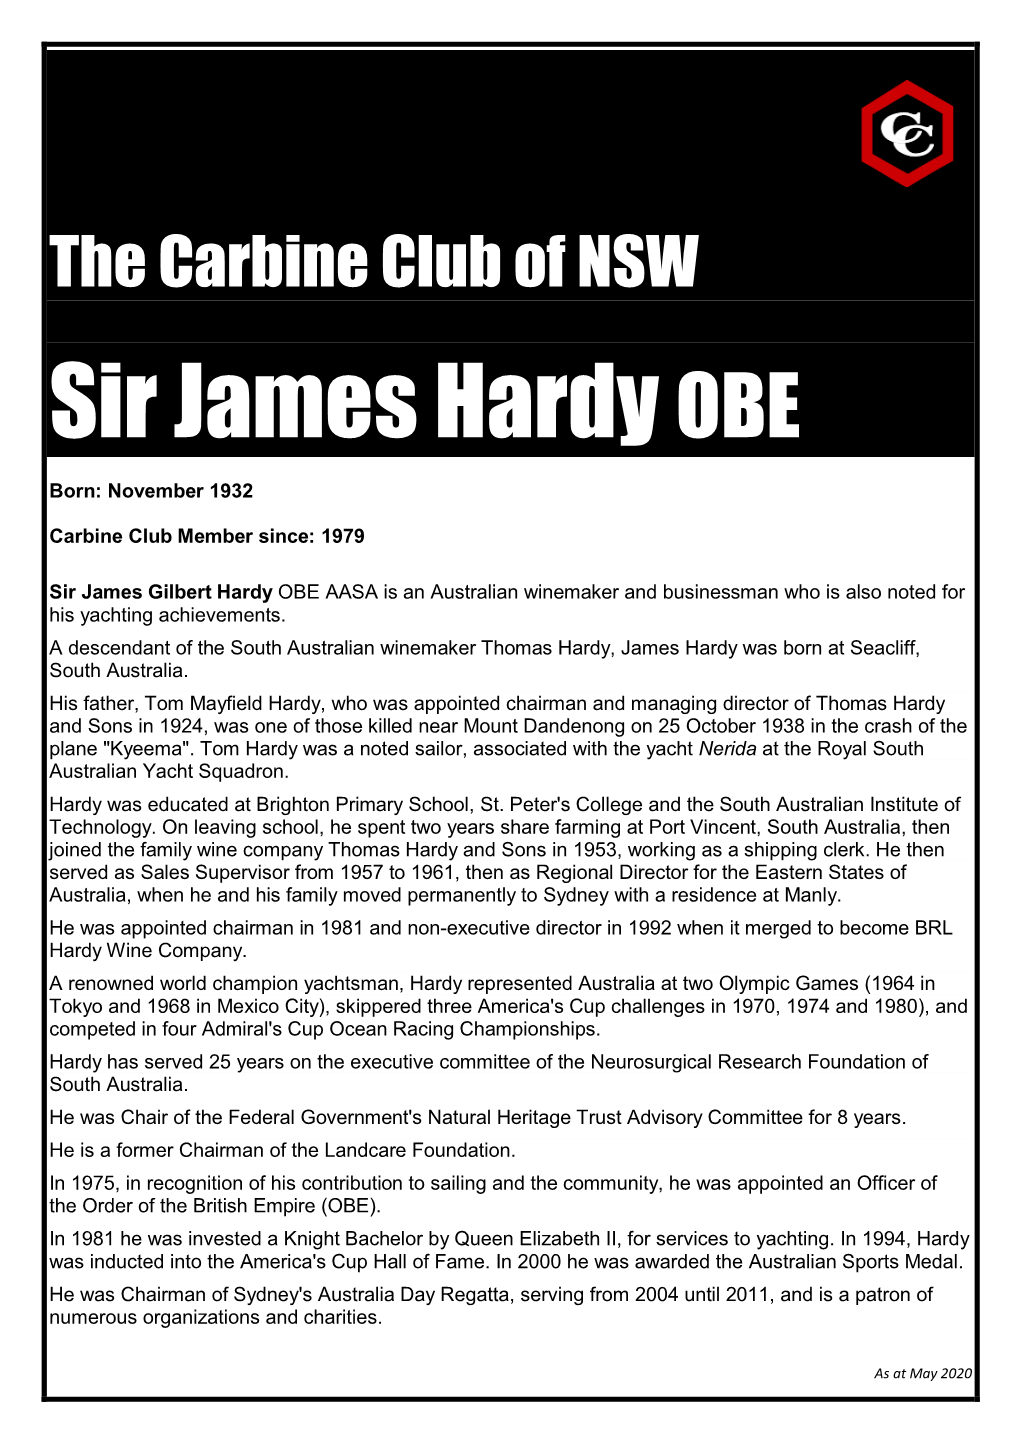 Sir James Hardy OBE